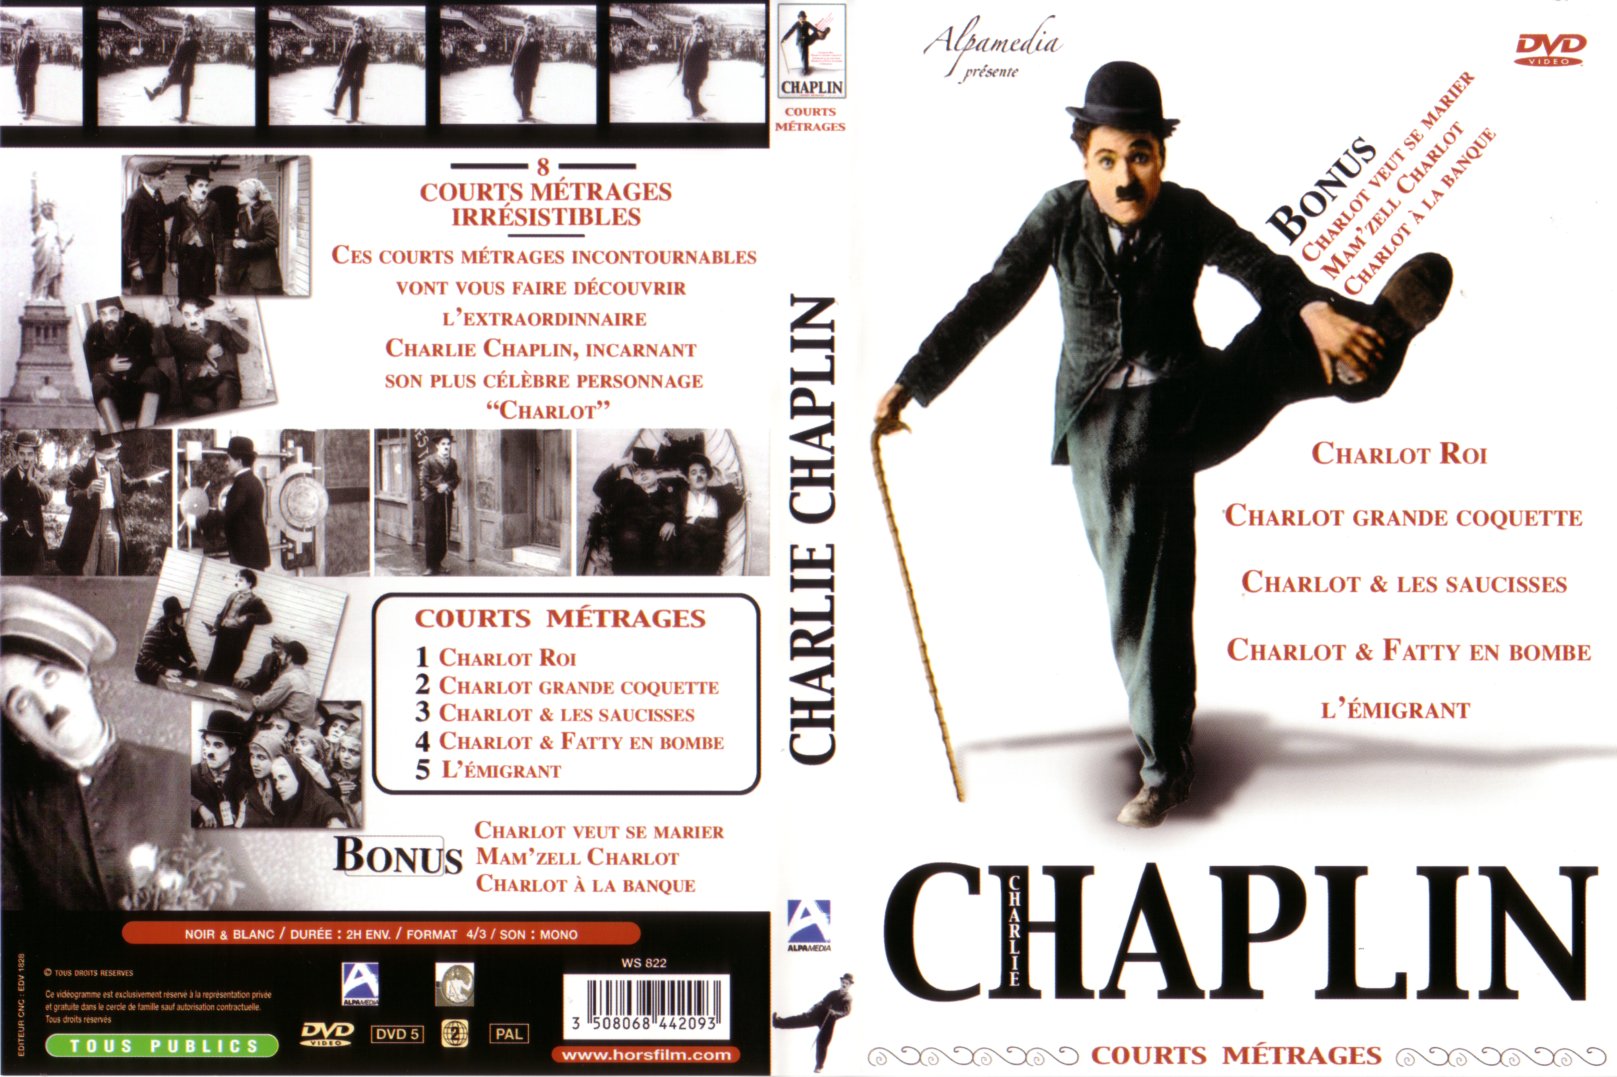 Jaquette DVD Chaplin (courts-mtrages)